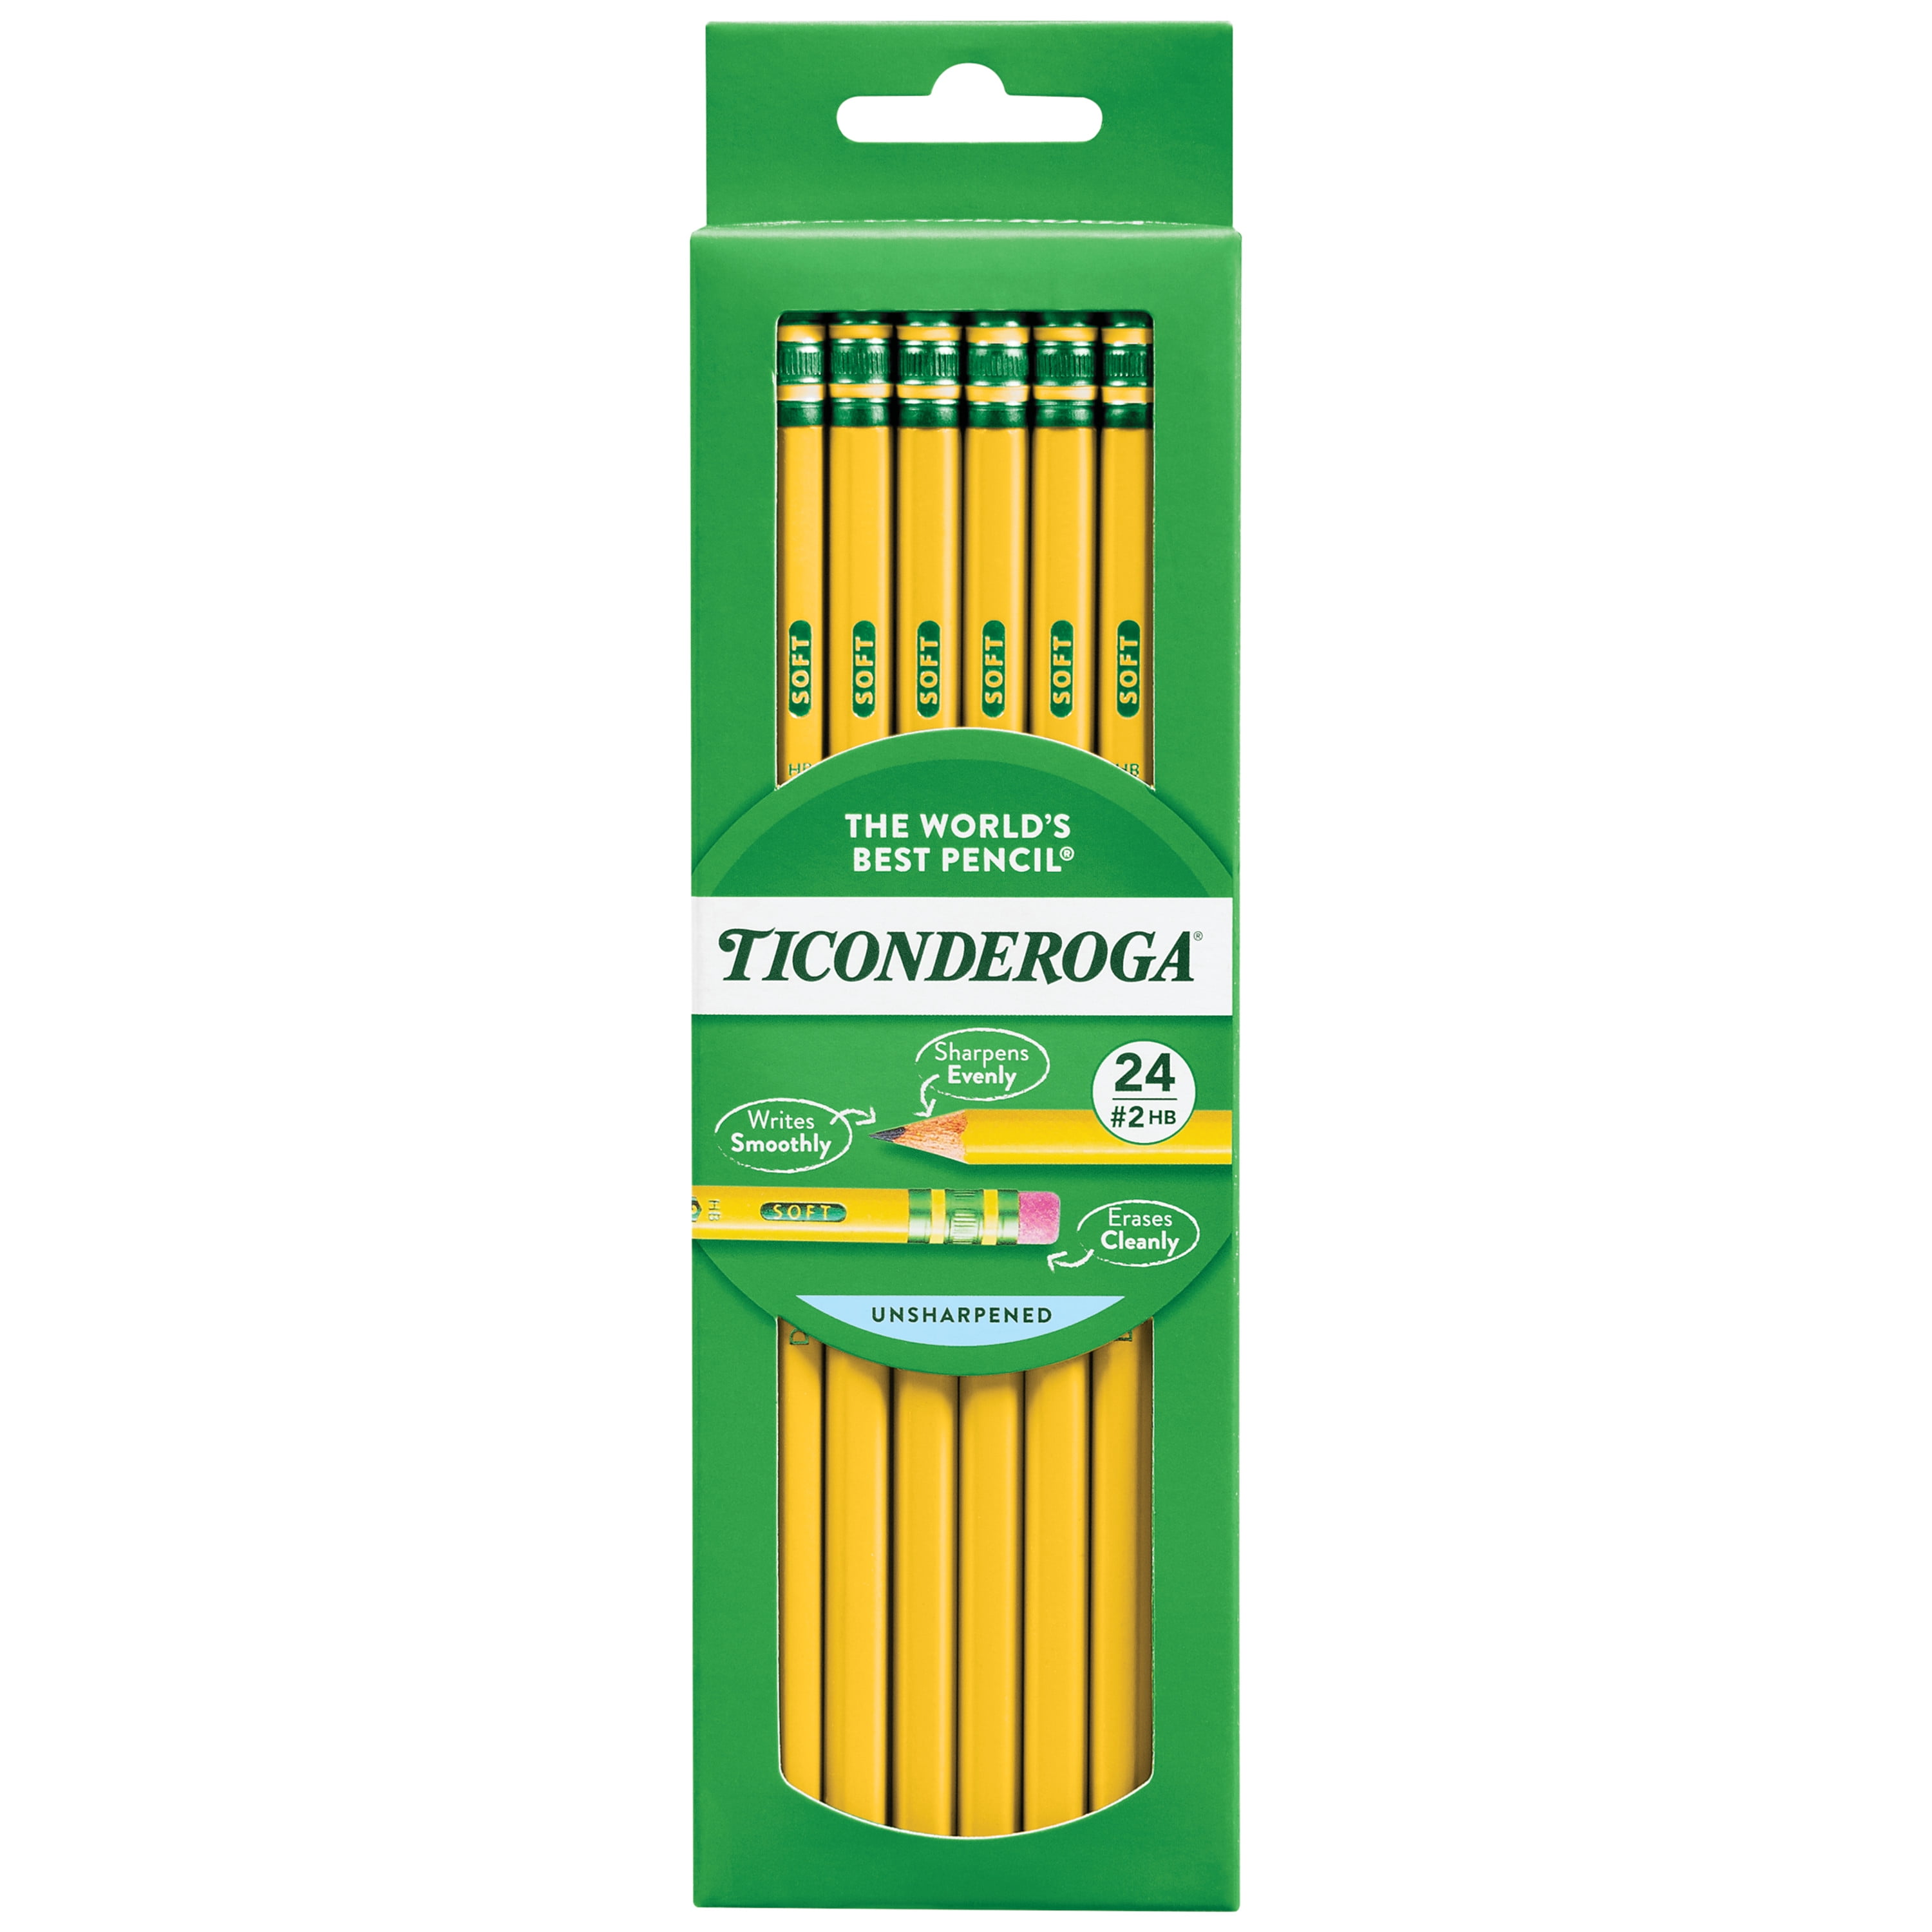 Texas-Sized Pencil  Texas Star Trading